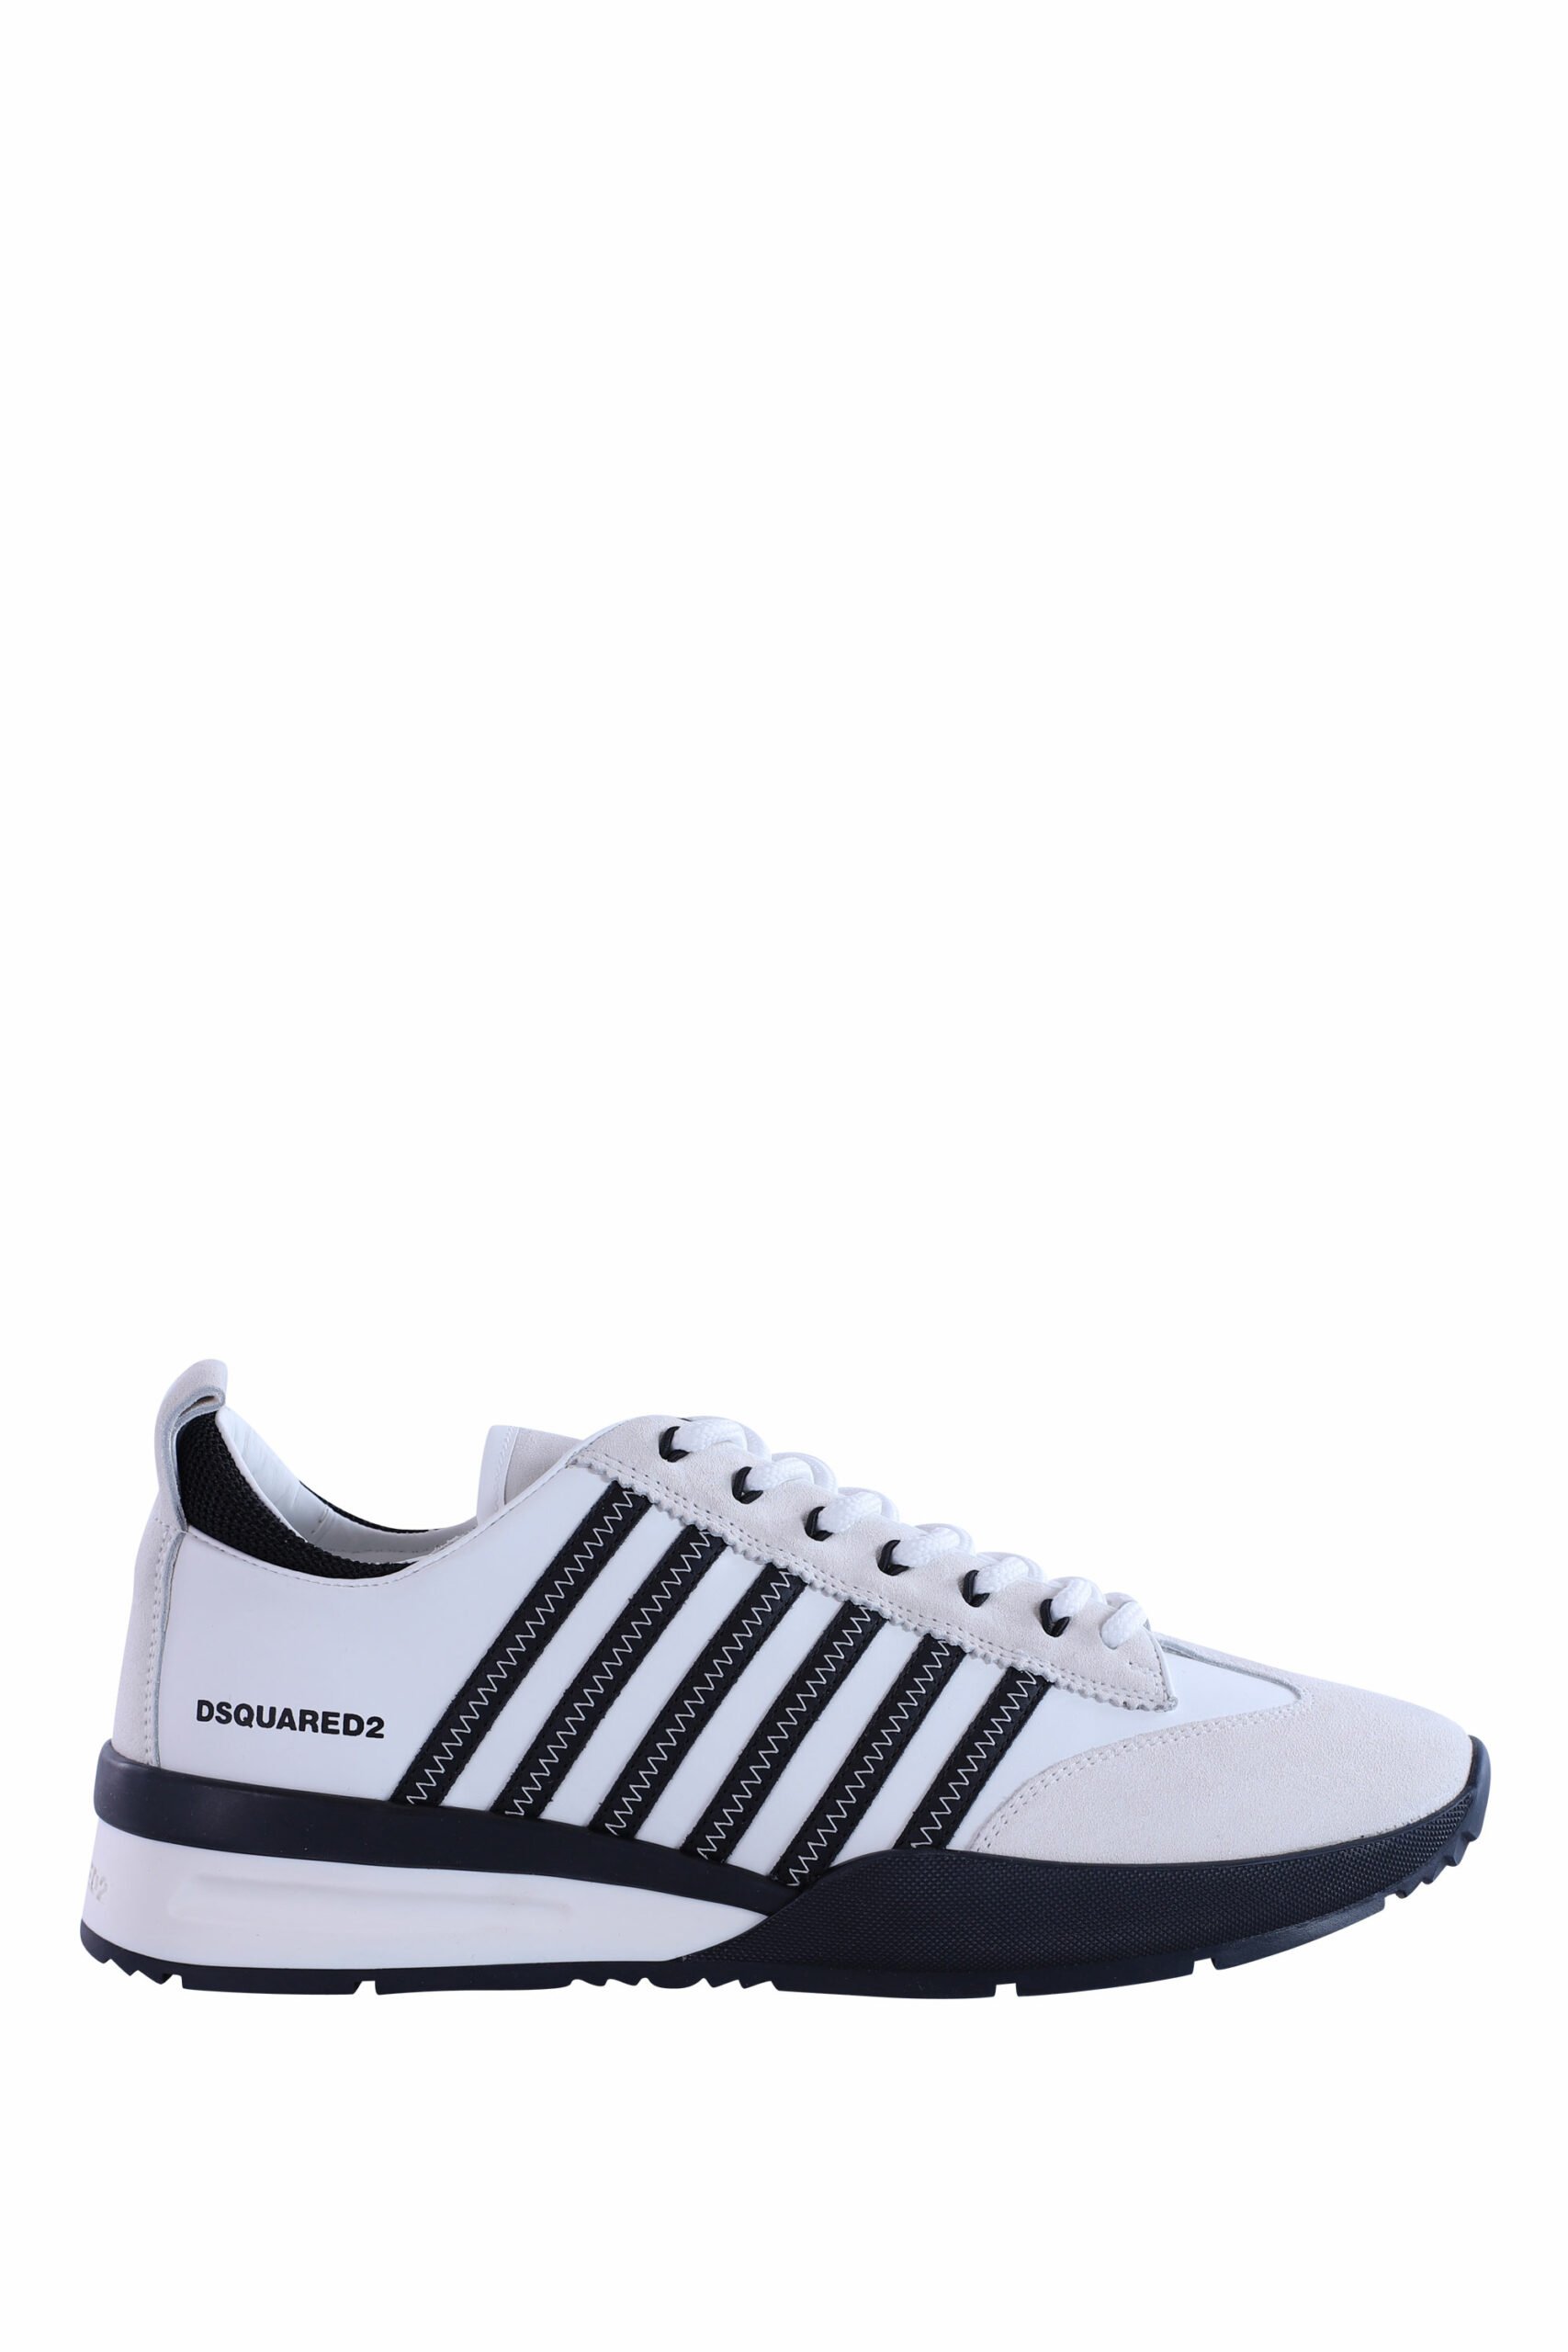 Dsquared2 - Zapatillas blancas y negras lineas - BLS Fashion